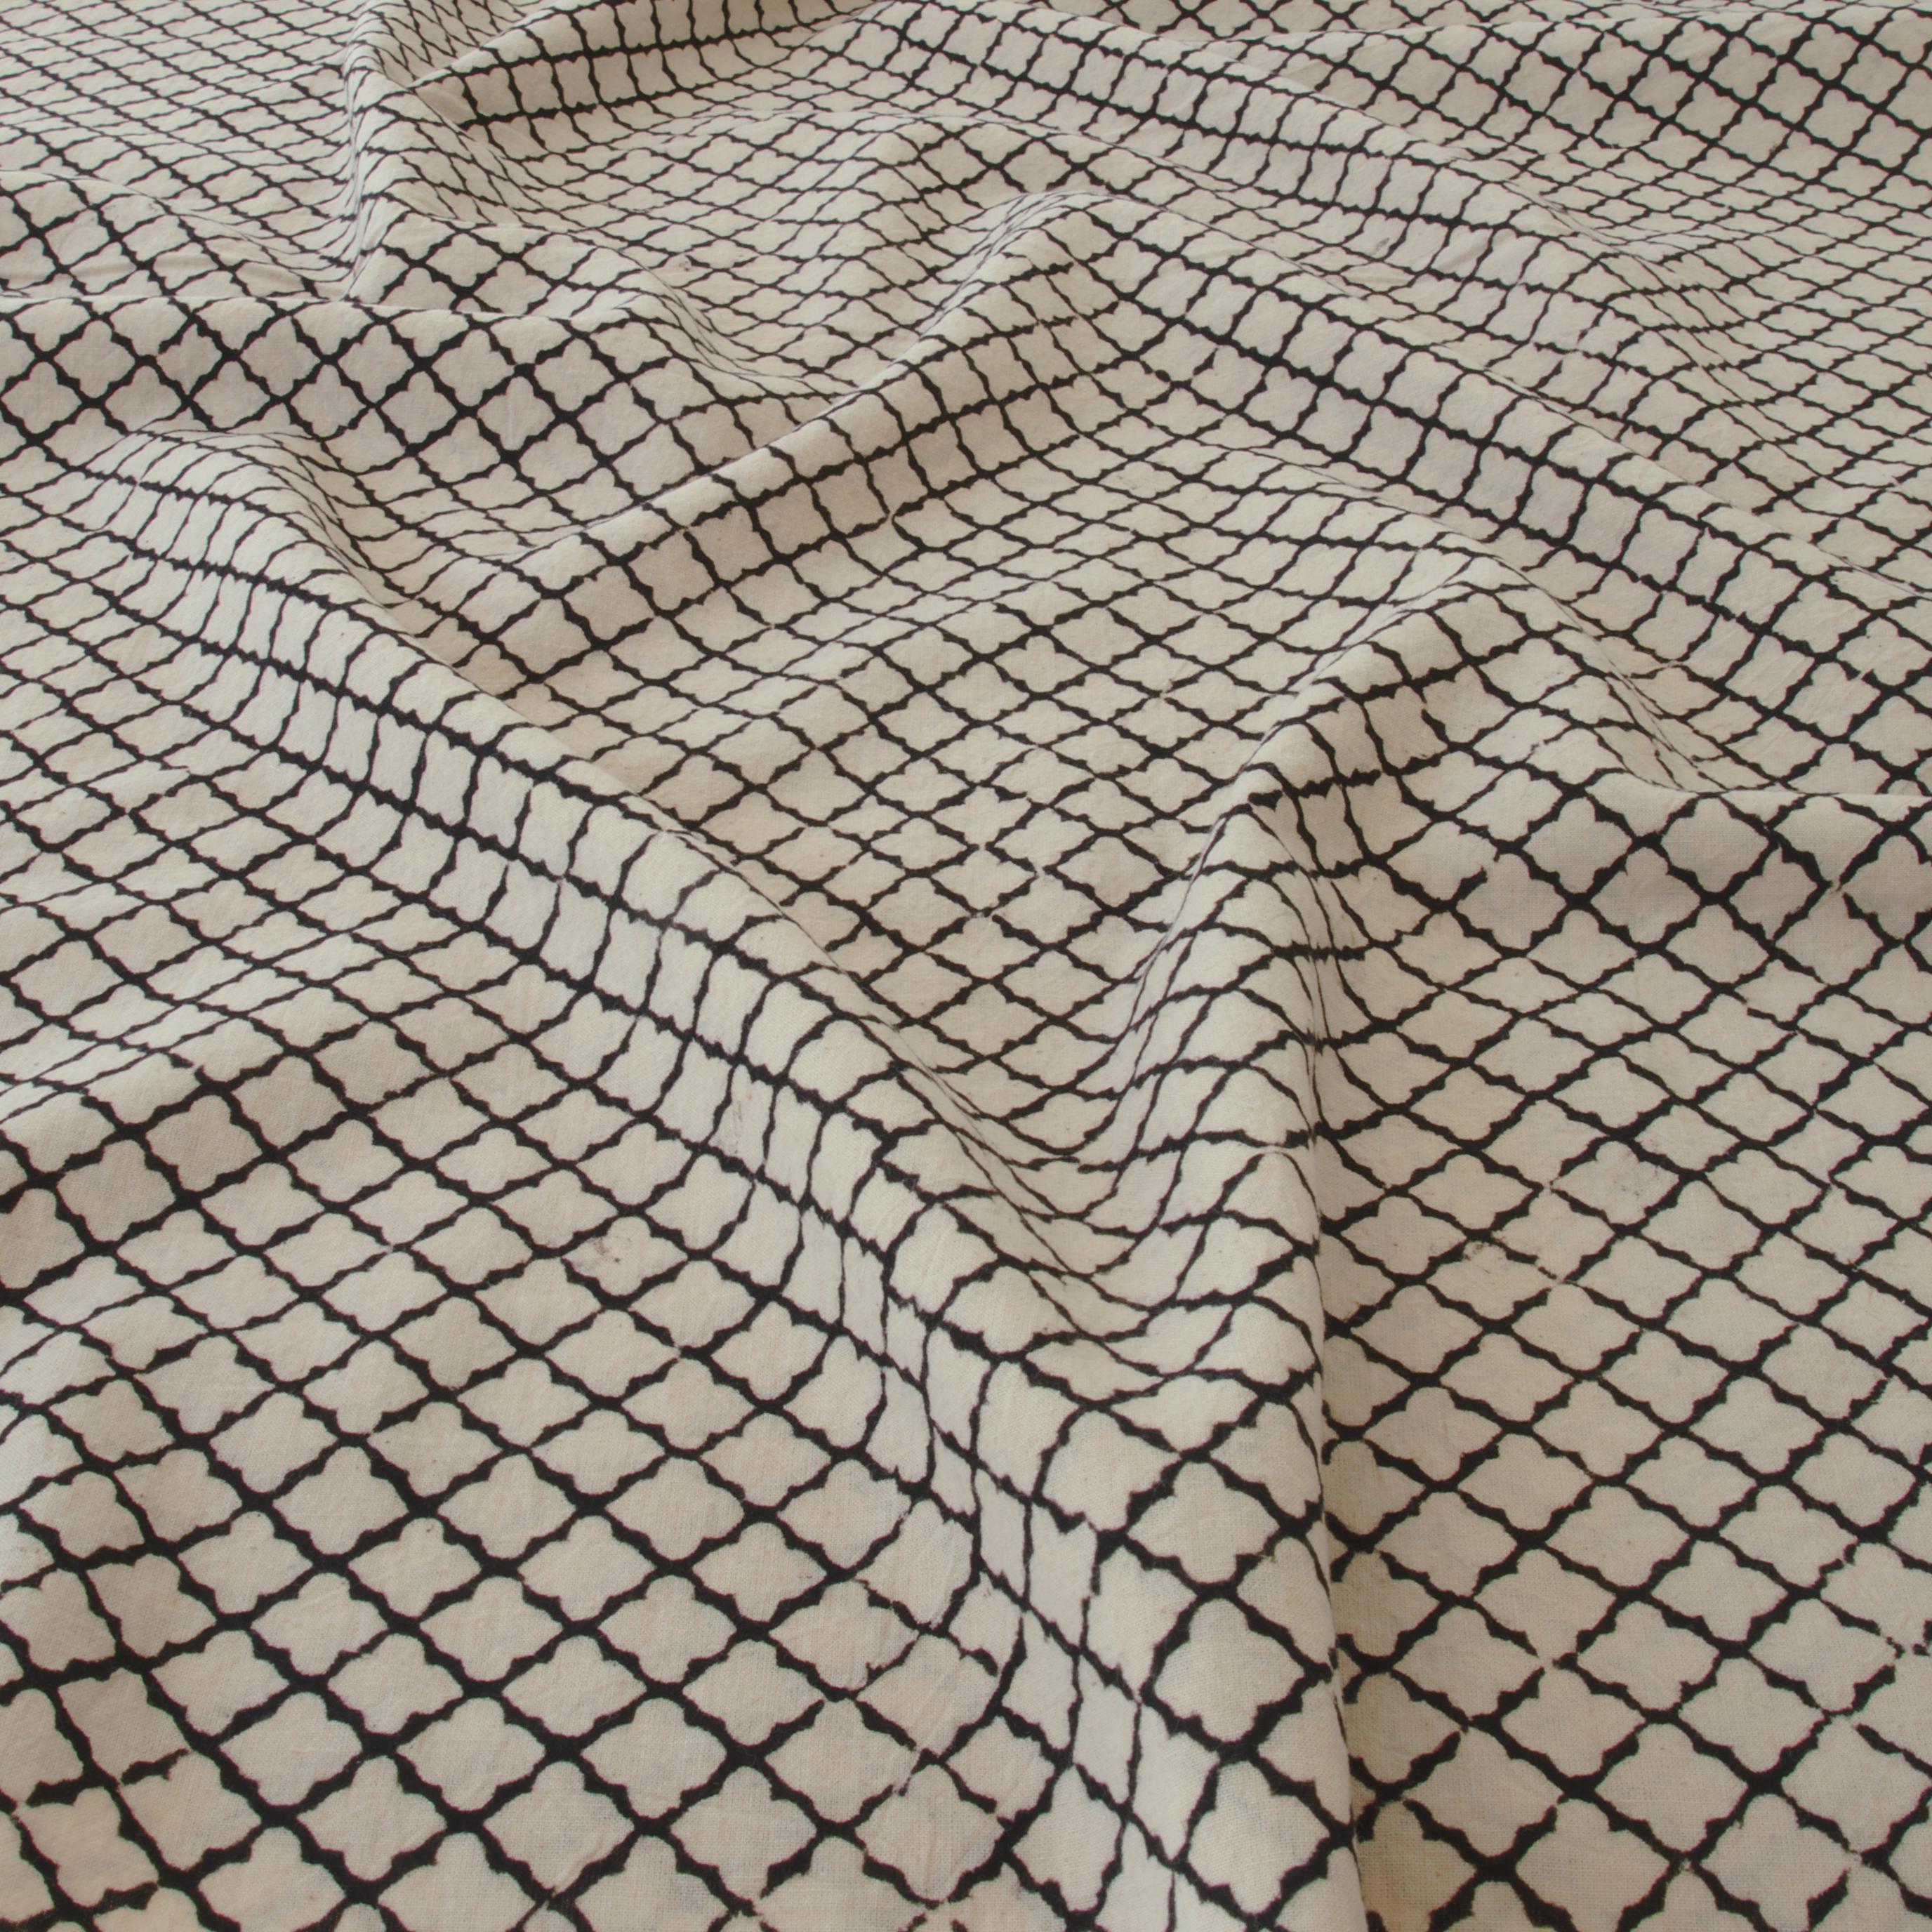 Block Printed Fabric, 100% Cotton, Ajrak Design: Beige Base, Iron Black Tumbling Block. Angle